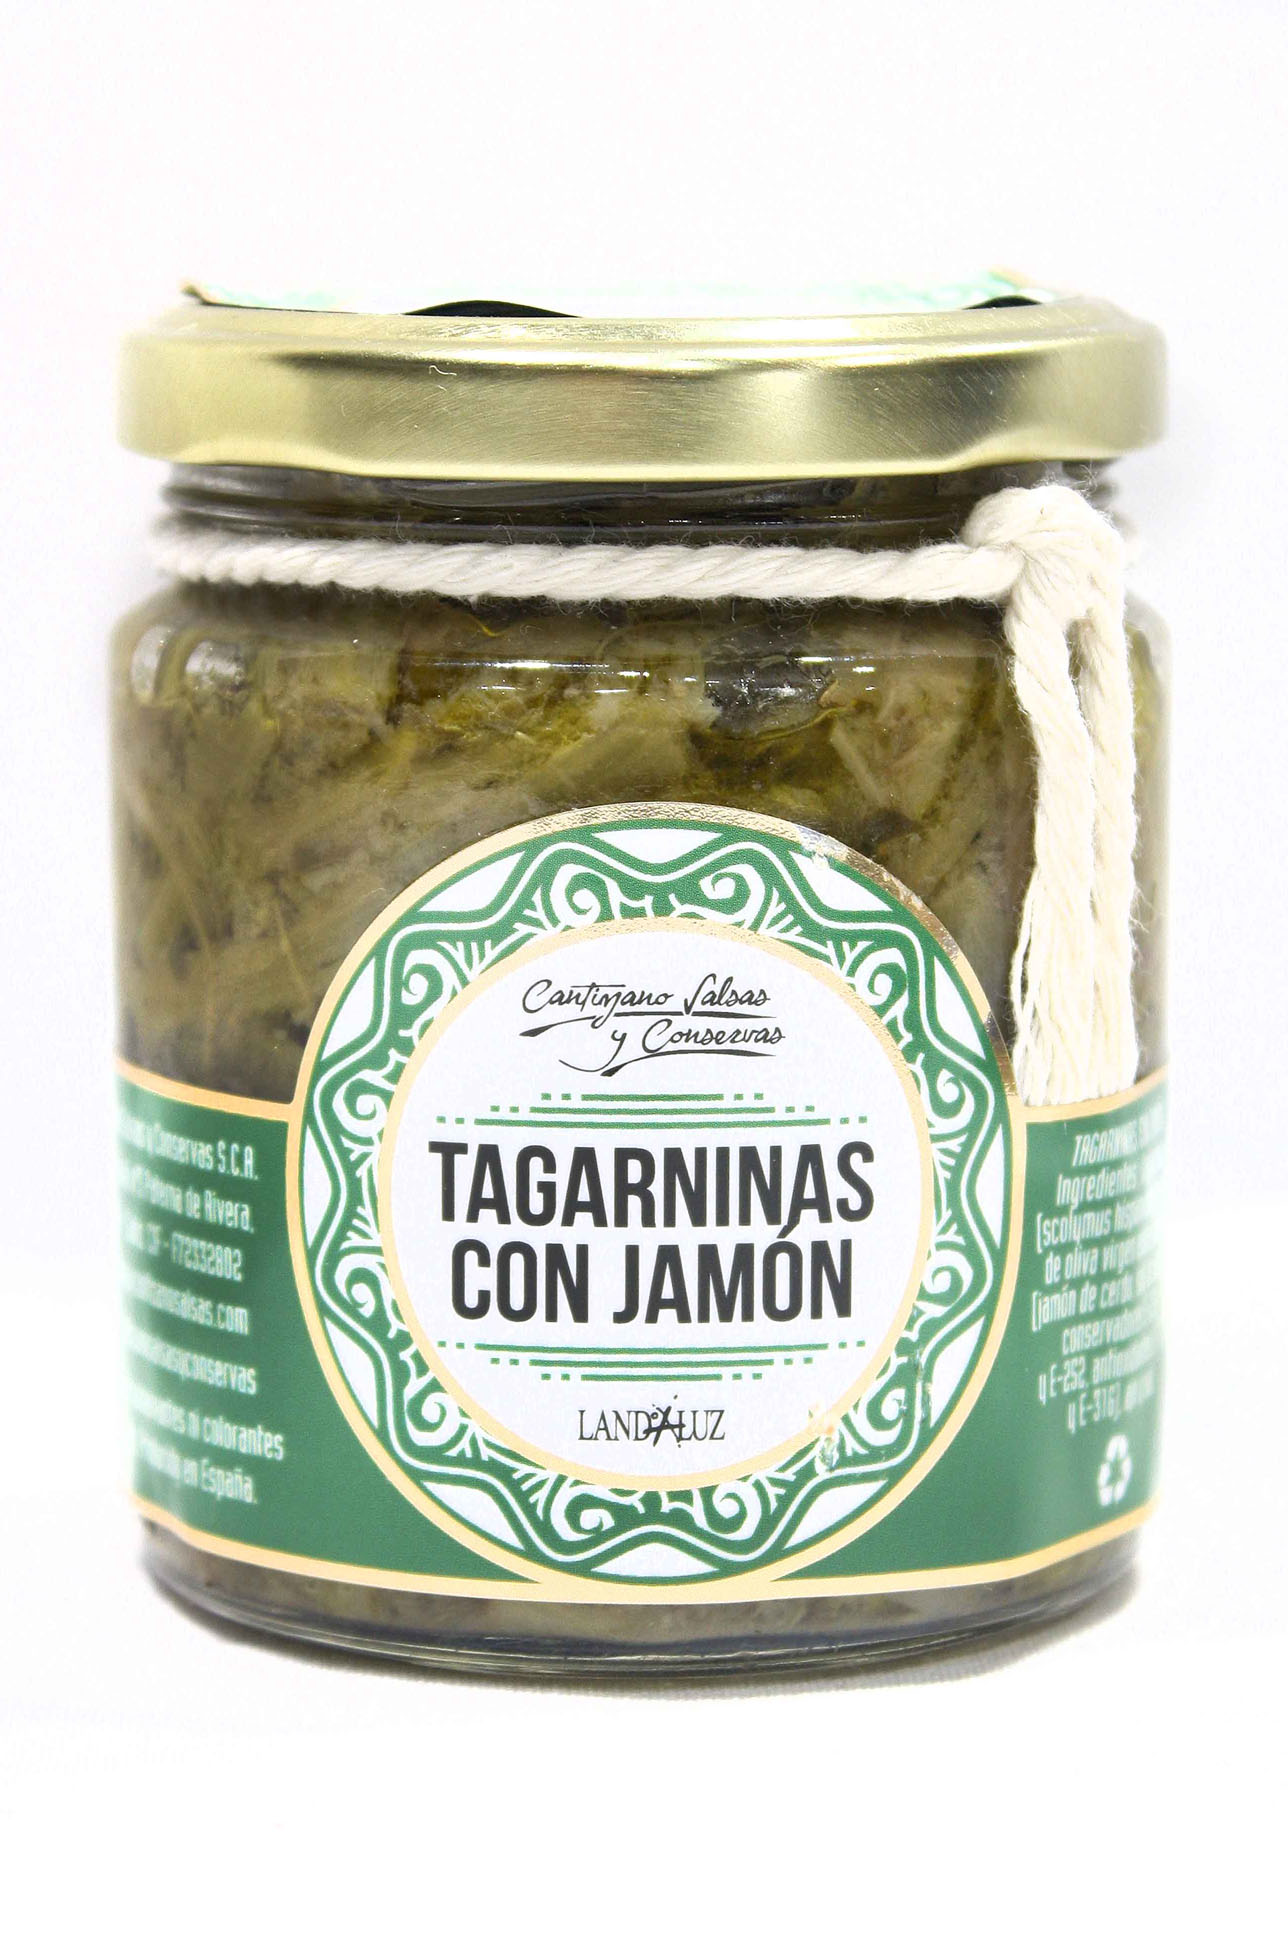 Tagraninas with ham